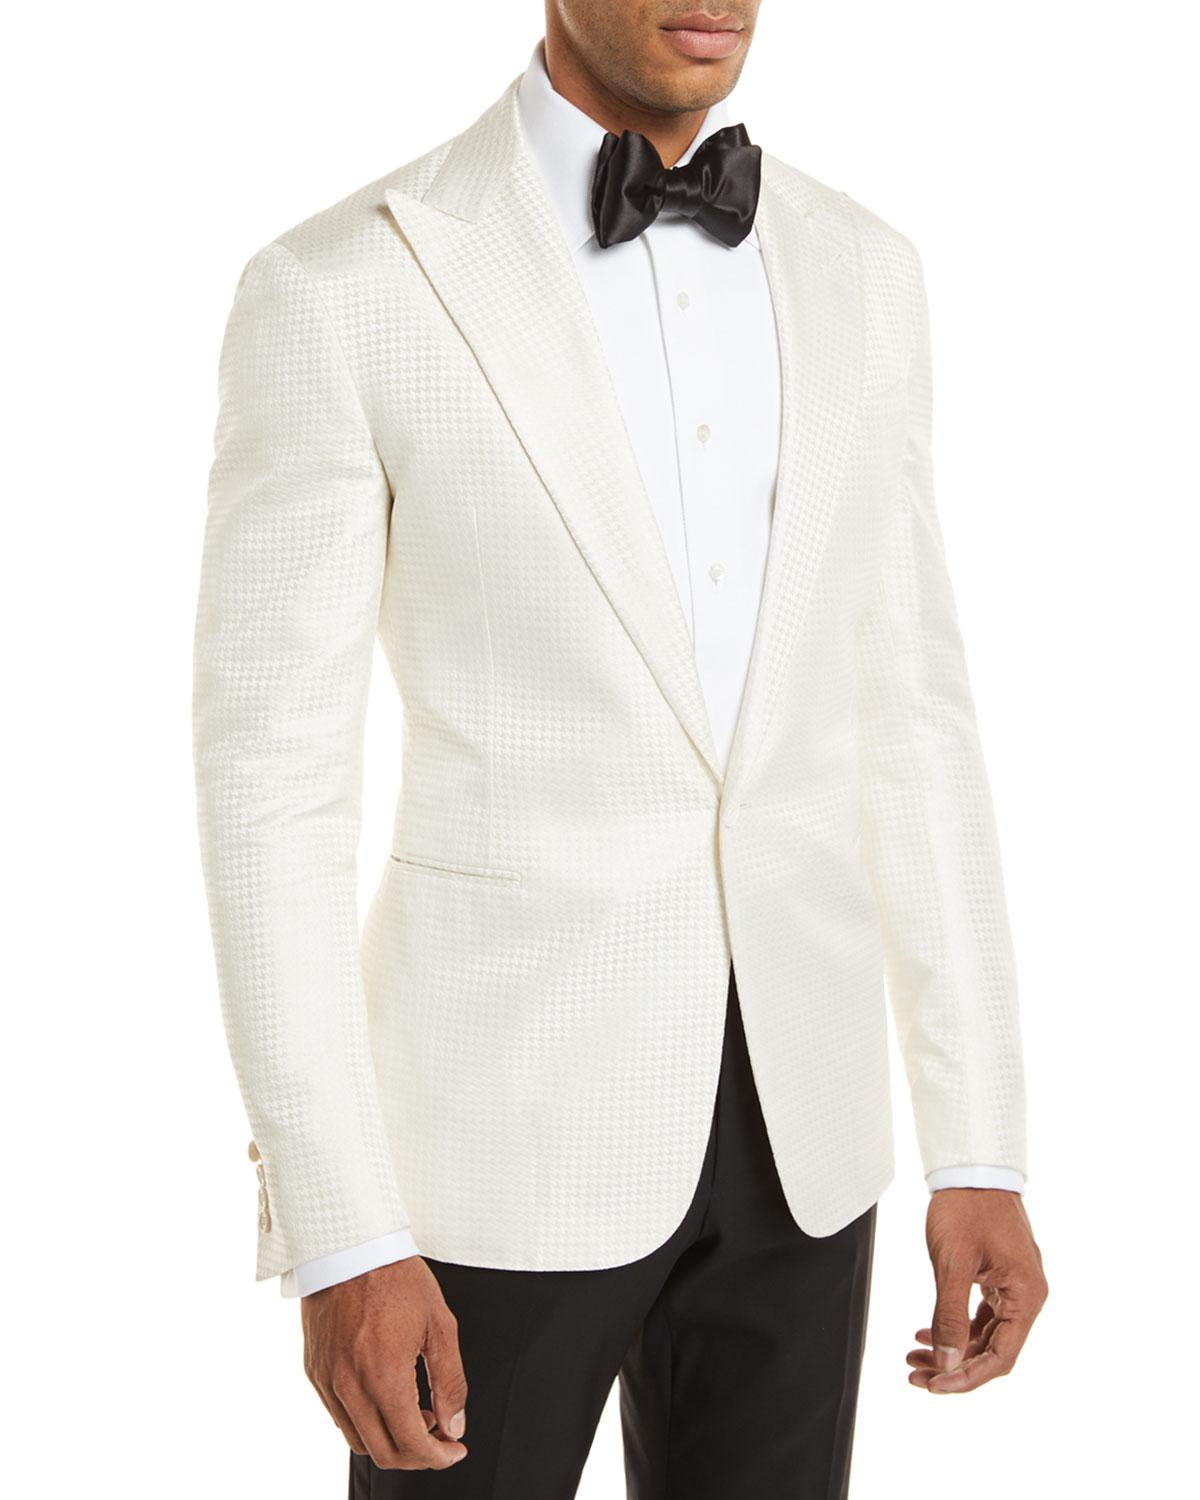 ralph lauren white tuxedo jacket